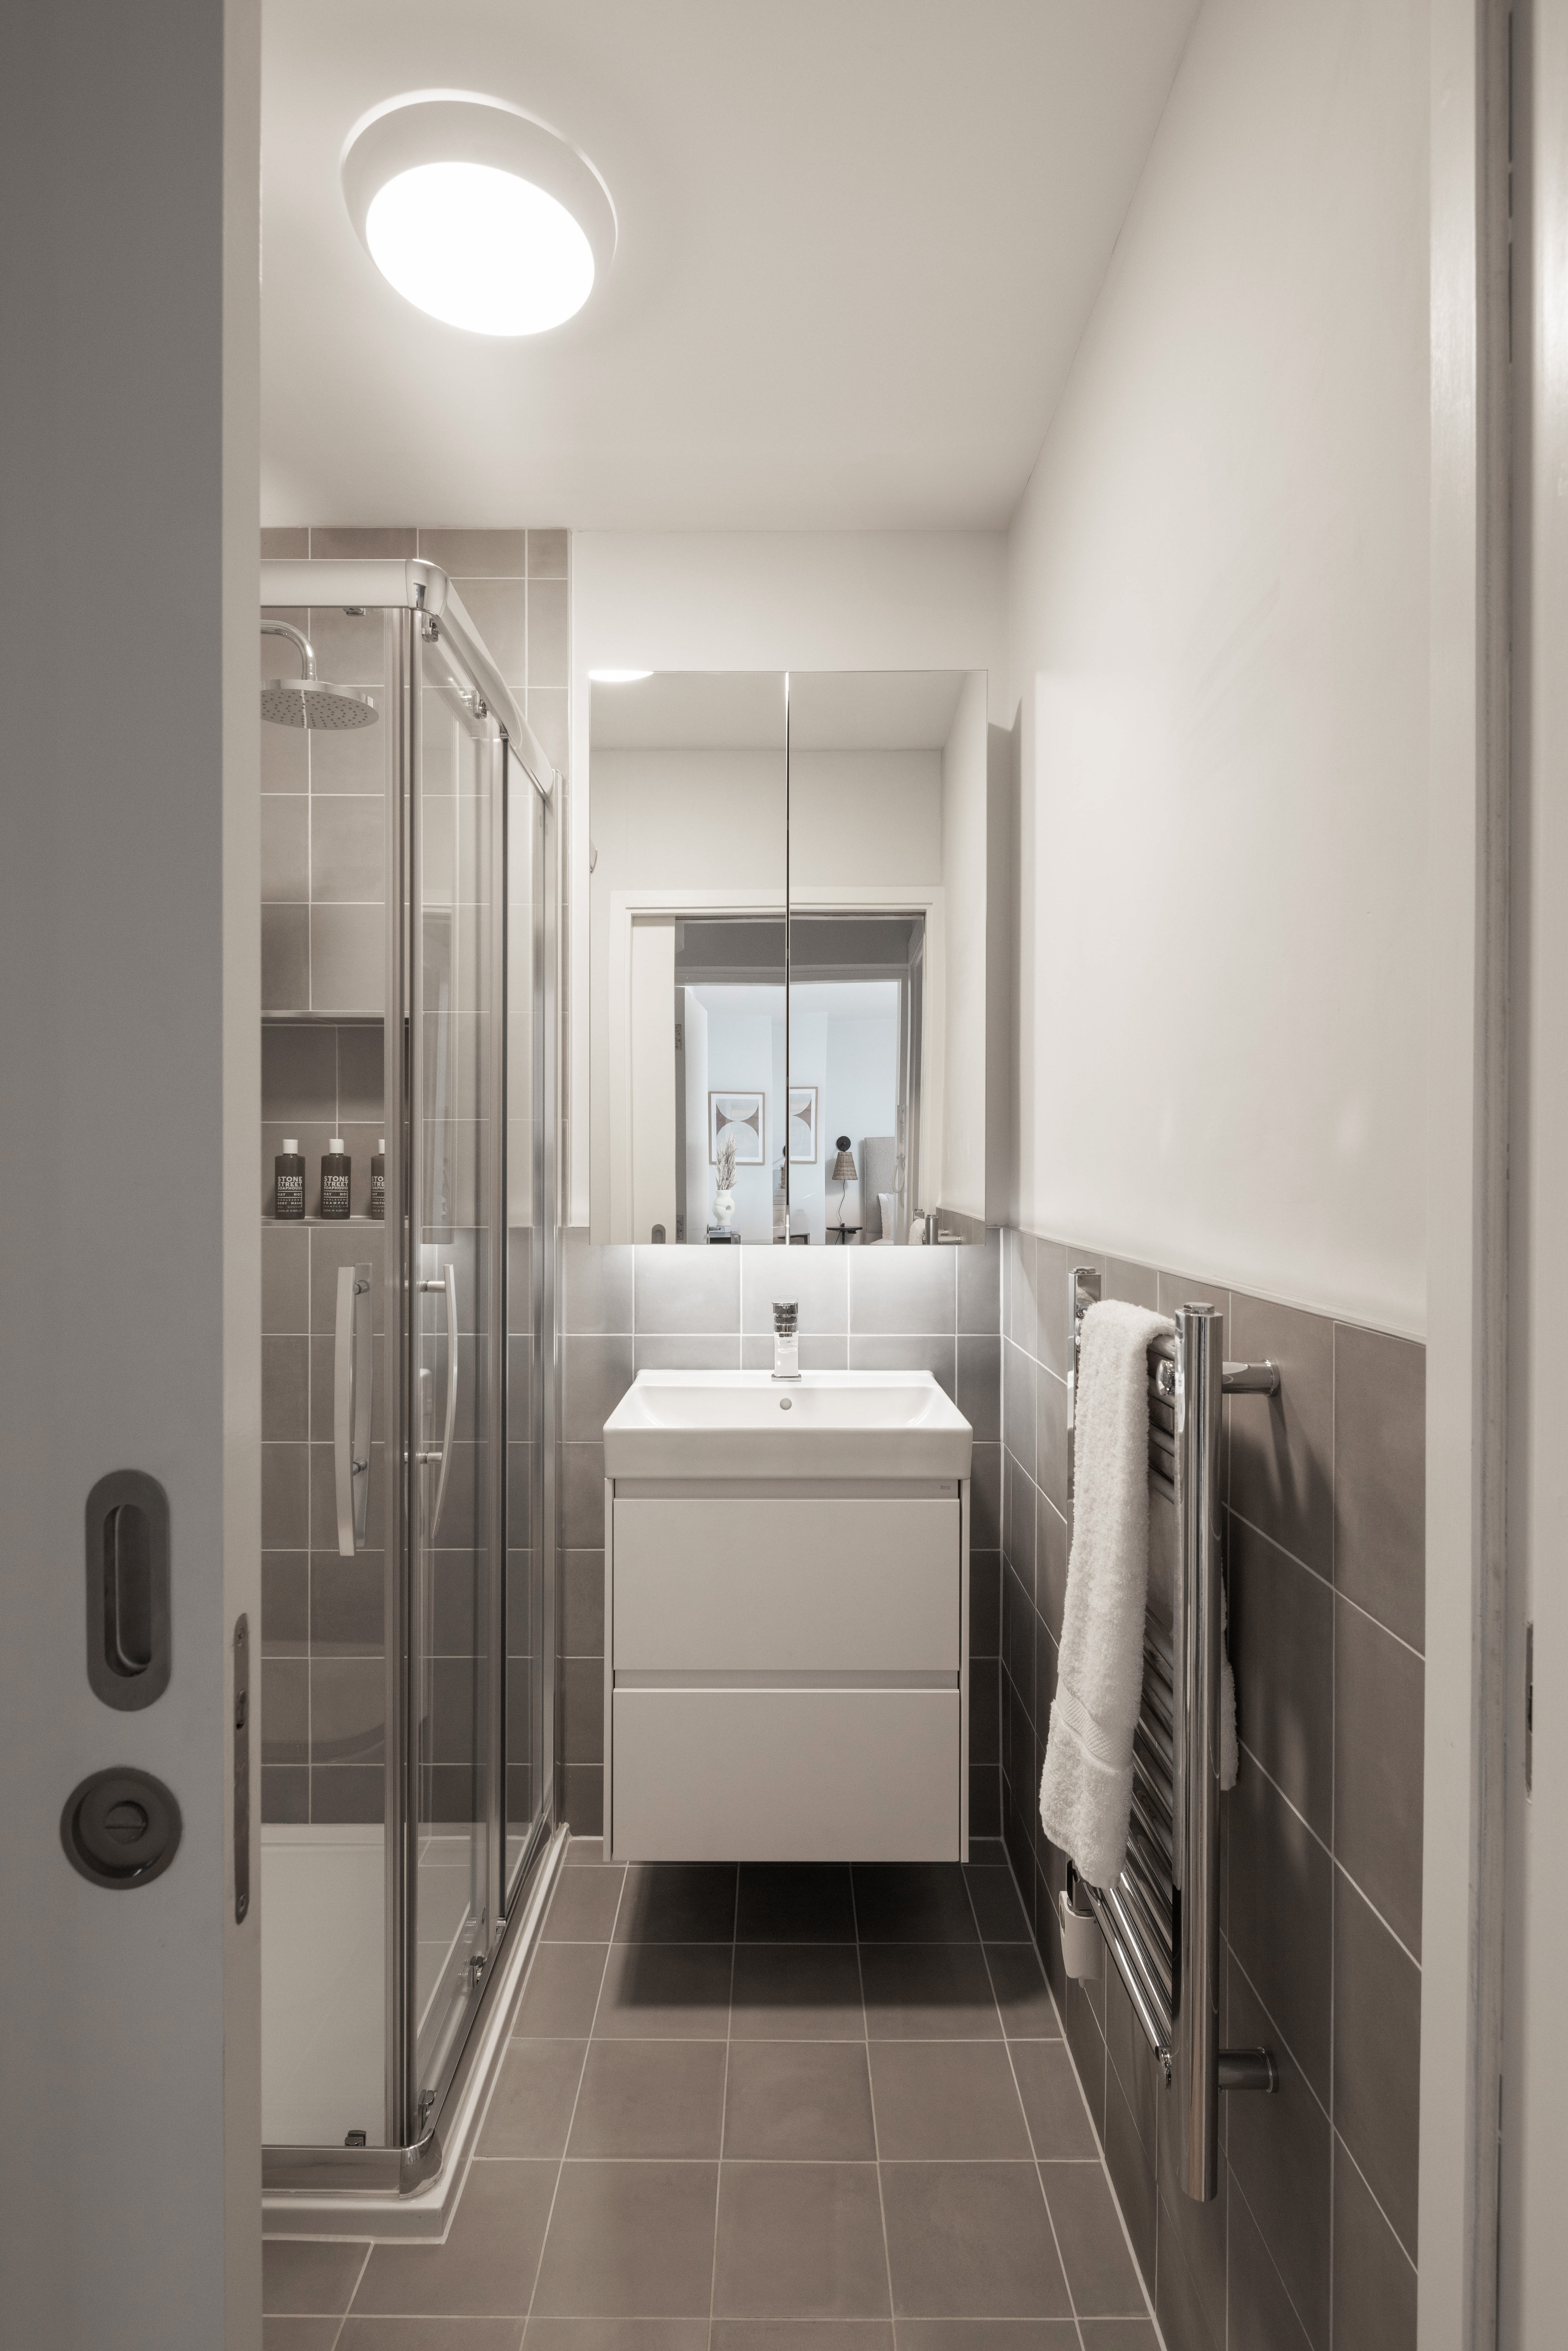 Bathroom - One Bedroom Apartment - Urban Rest Merrion Square - Dublin